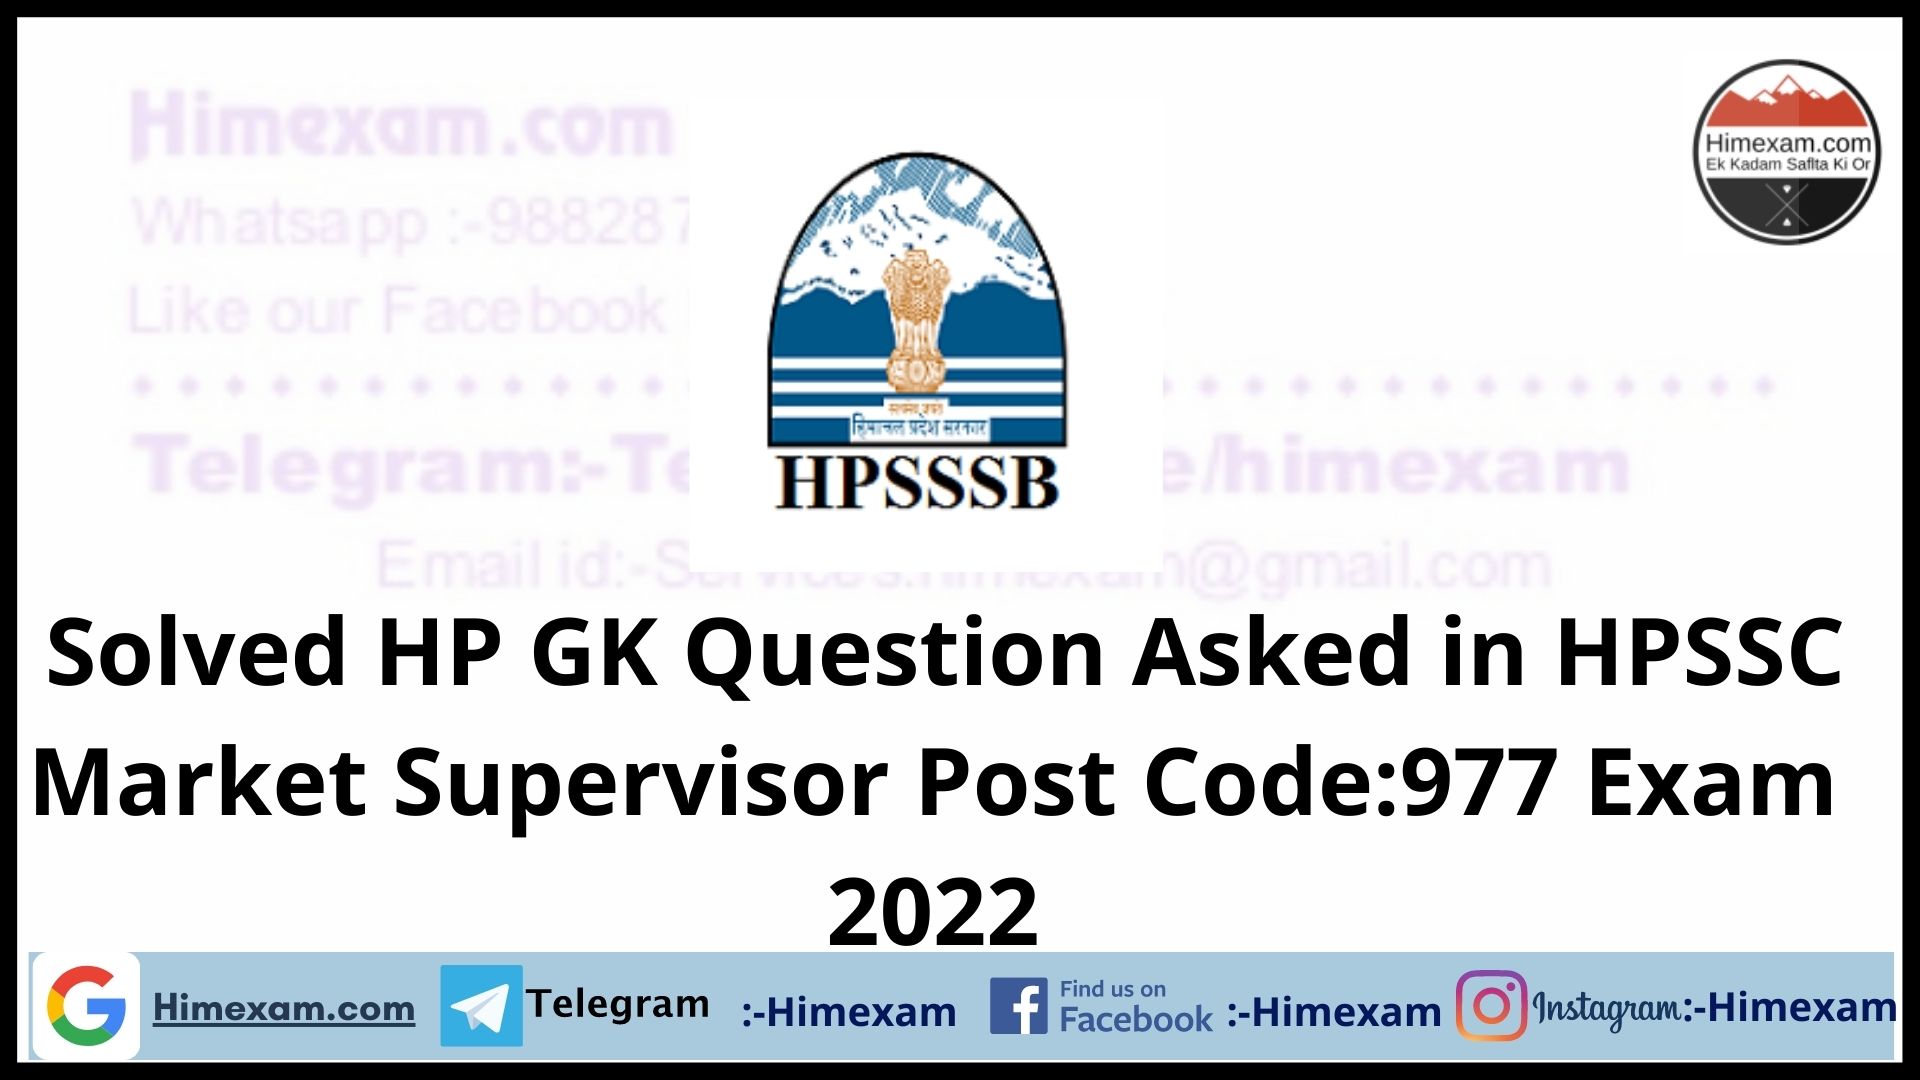 Solved HP GK Question Asked in HPSSC Market Supervisor Post Code:977 Exam 2022